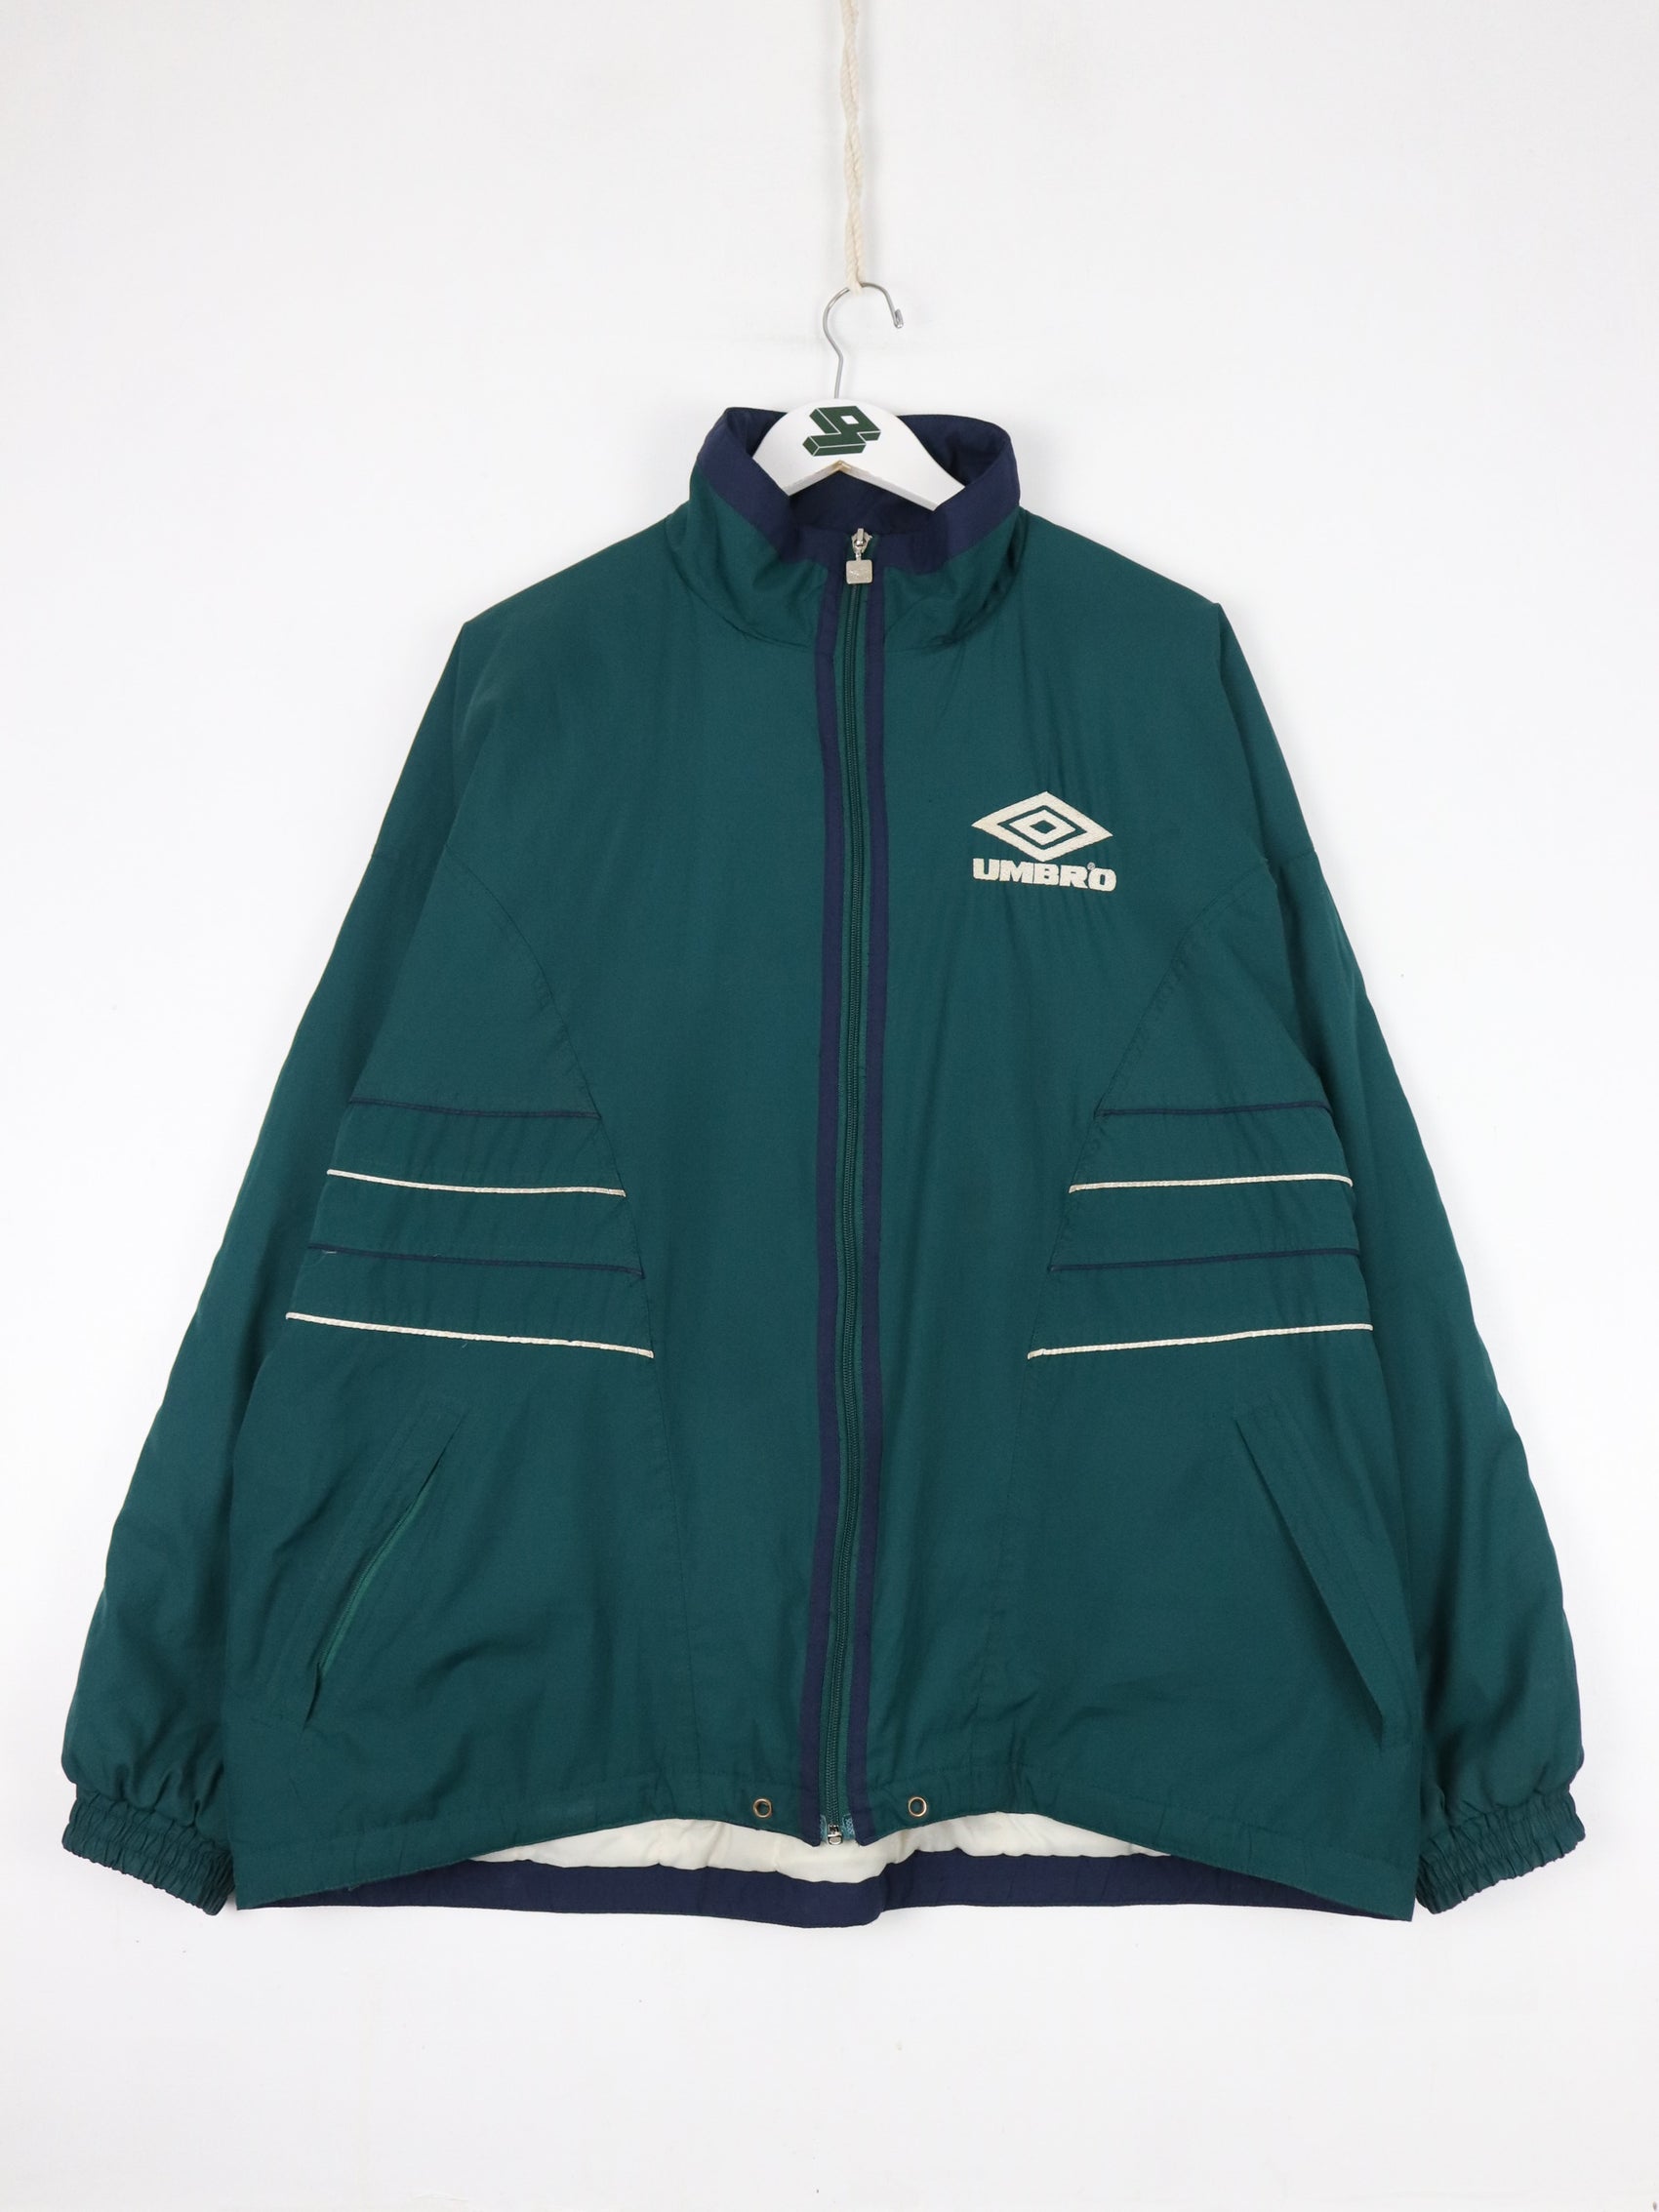 Vintage Umbro Jacket Mens XL Green 90s Coat